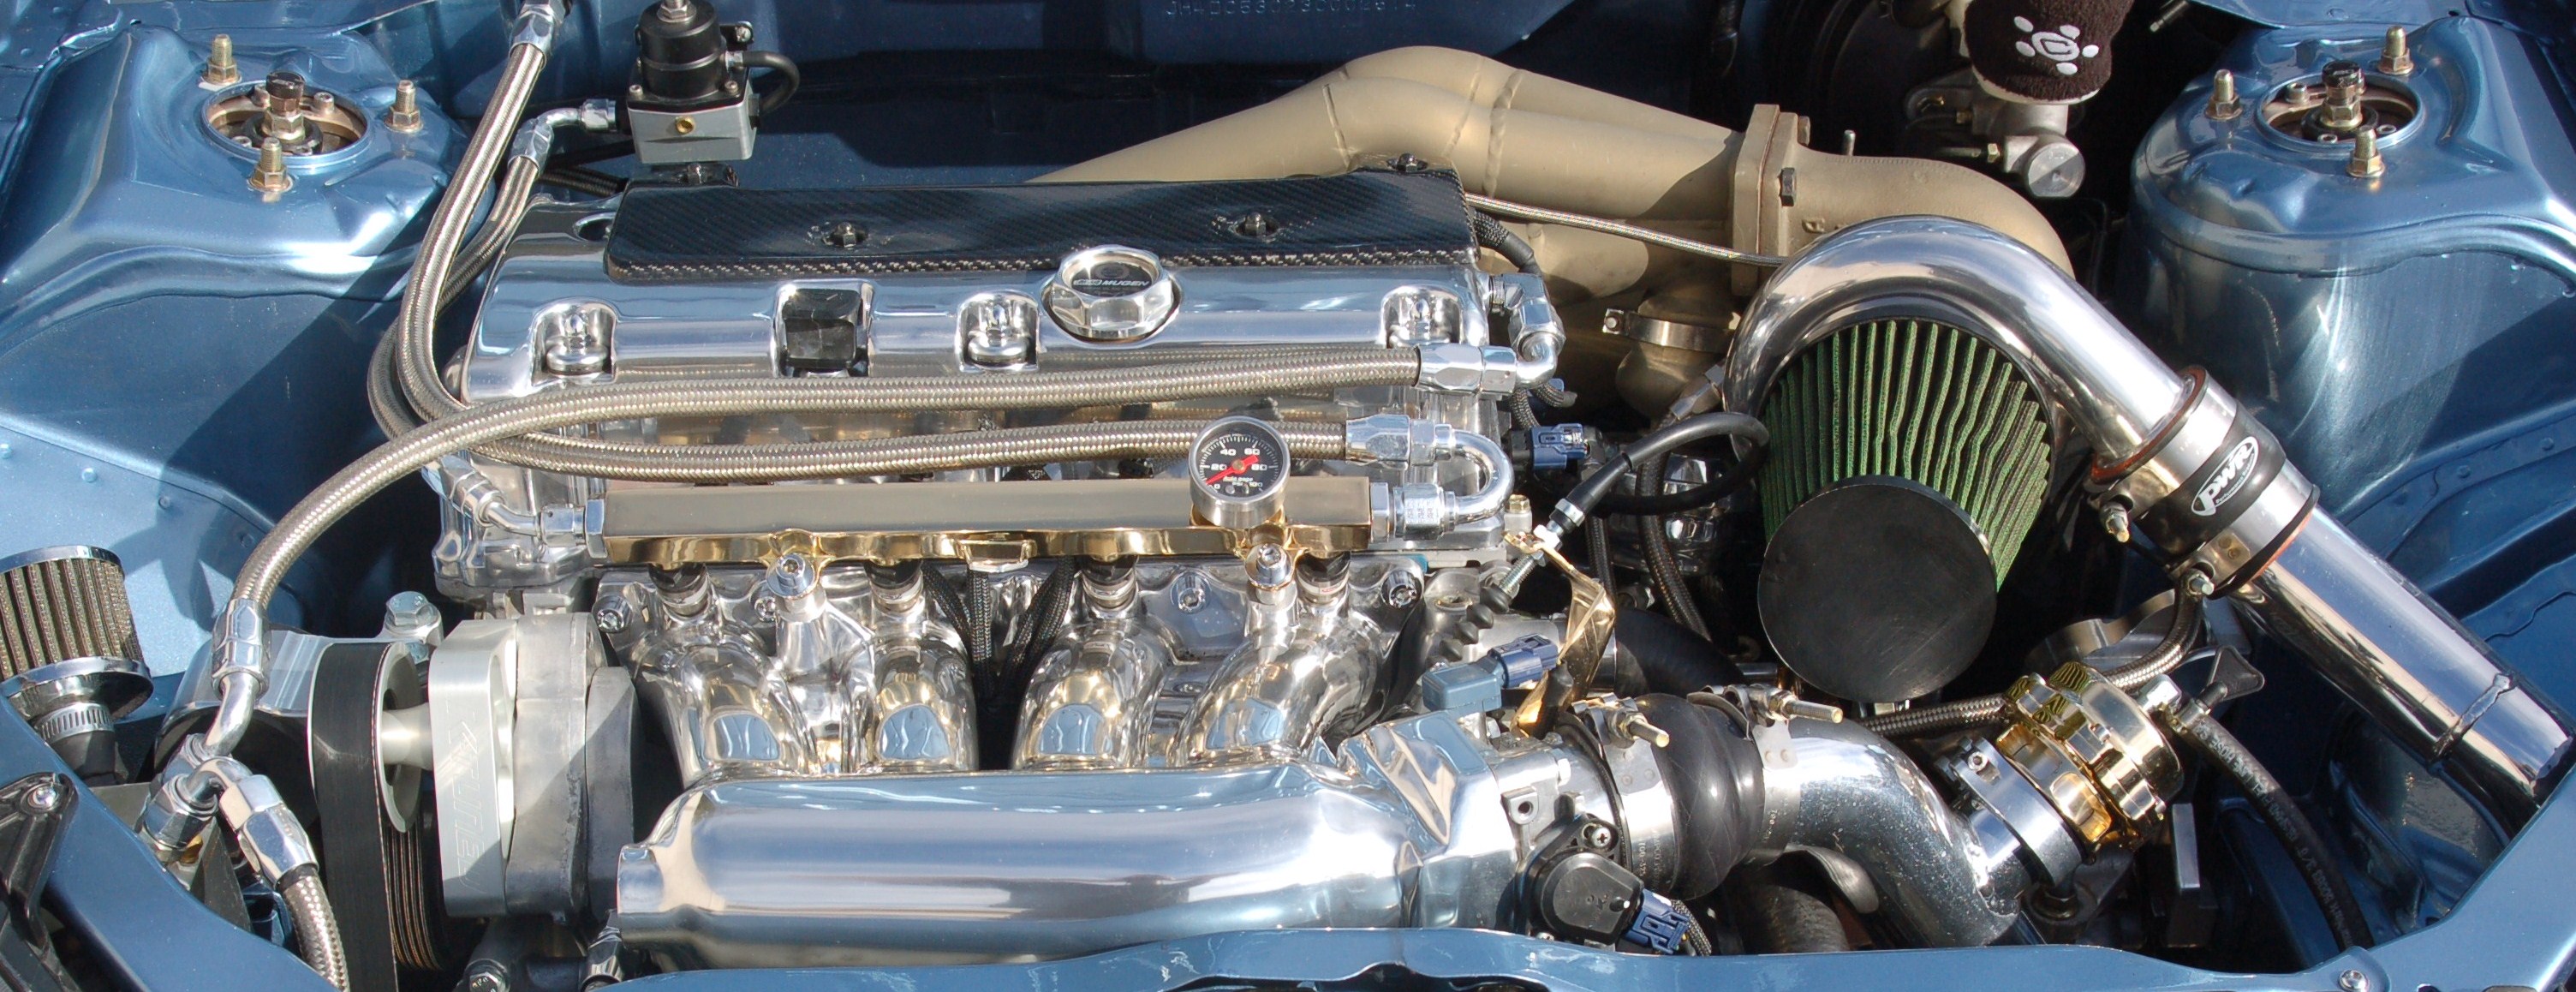 2003 Acura RSX Engine